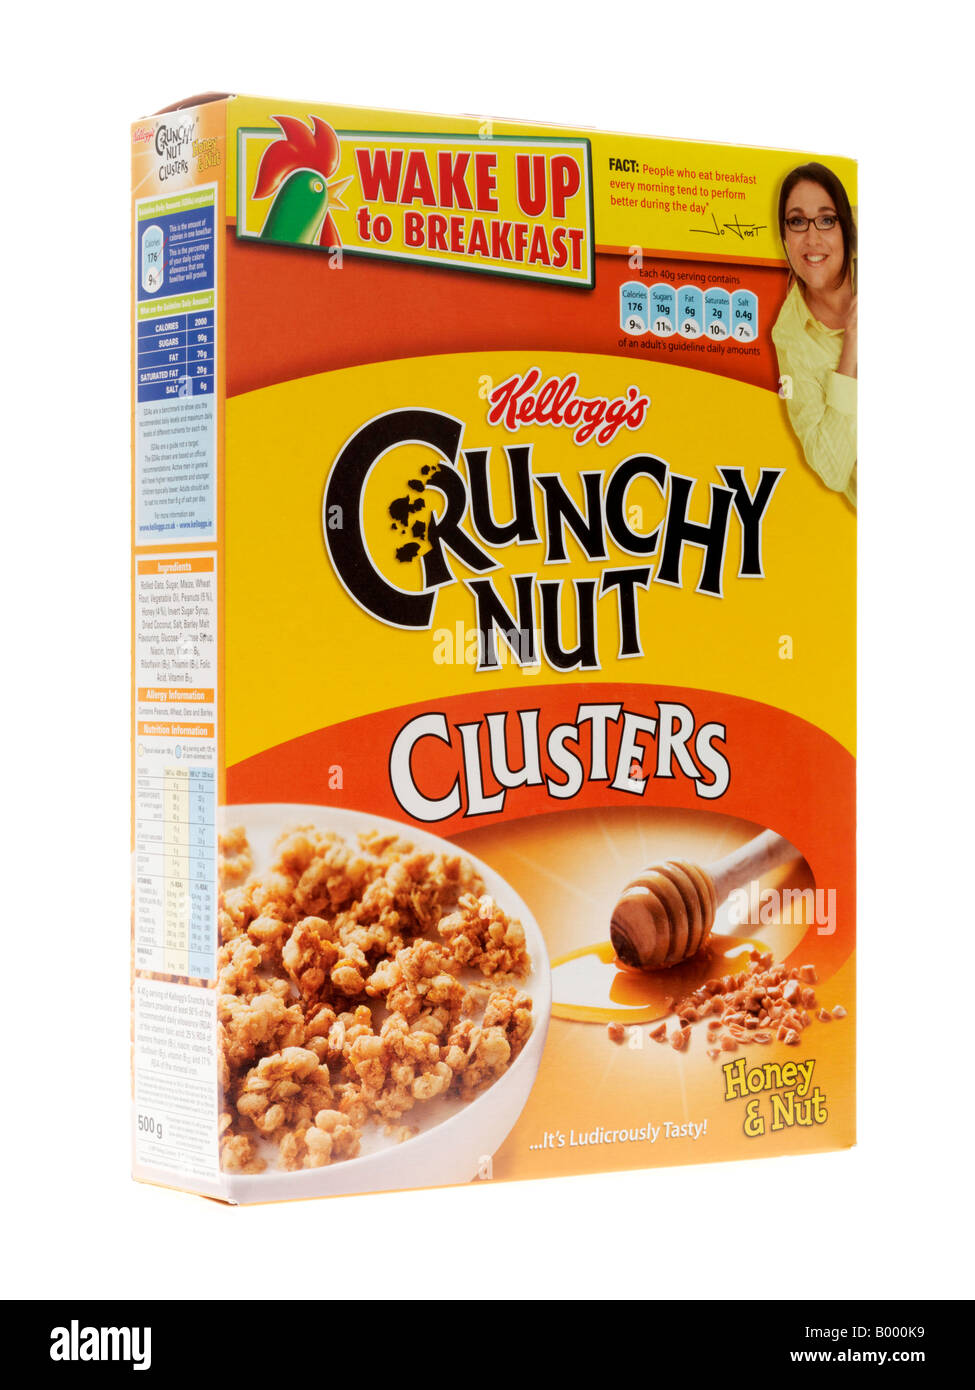 https://c8.alamy.com/comp/B000K9/crunchy-nut-breakfast-cereal-B000K9.jpg